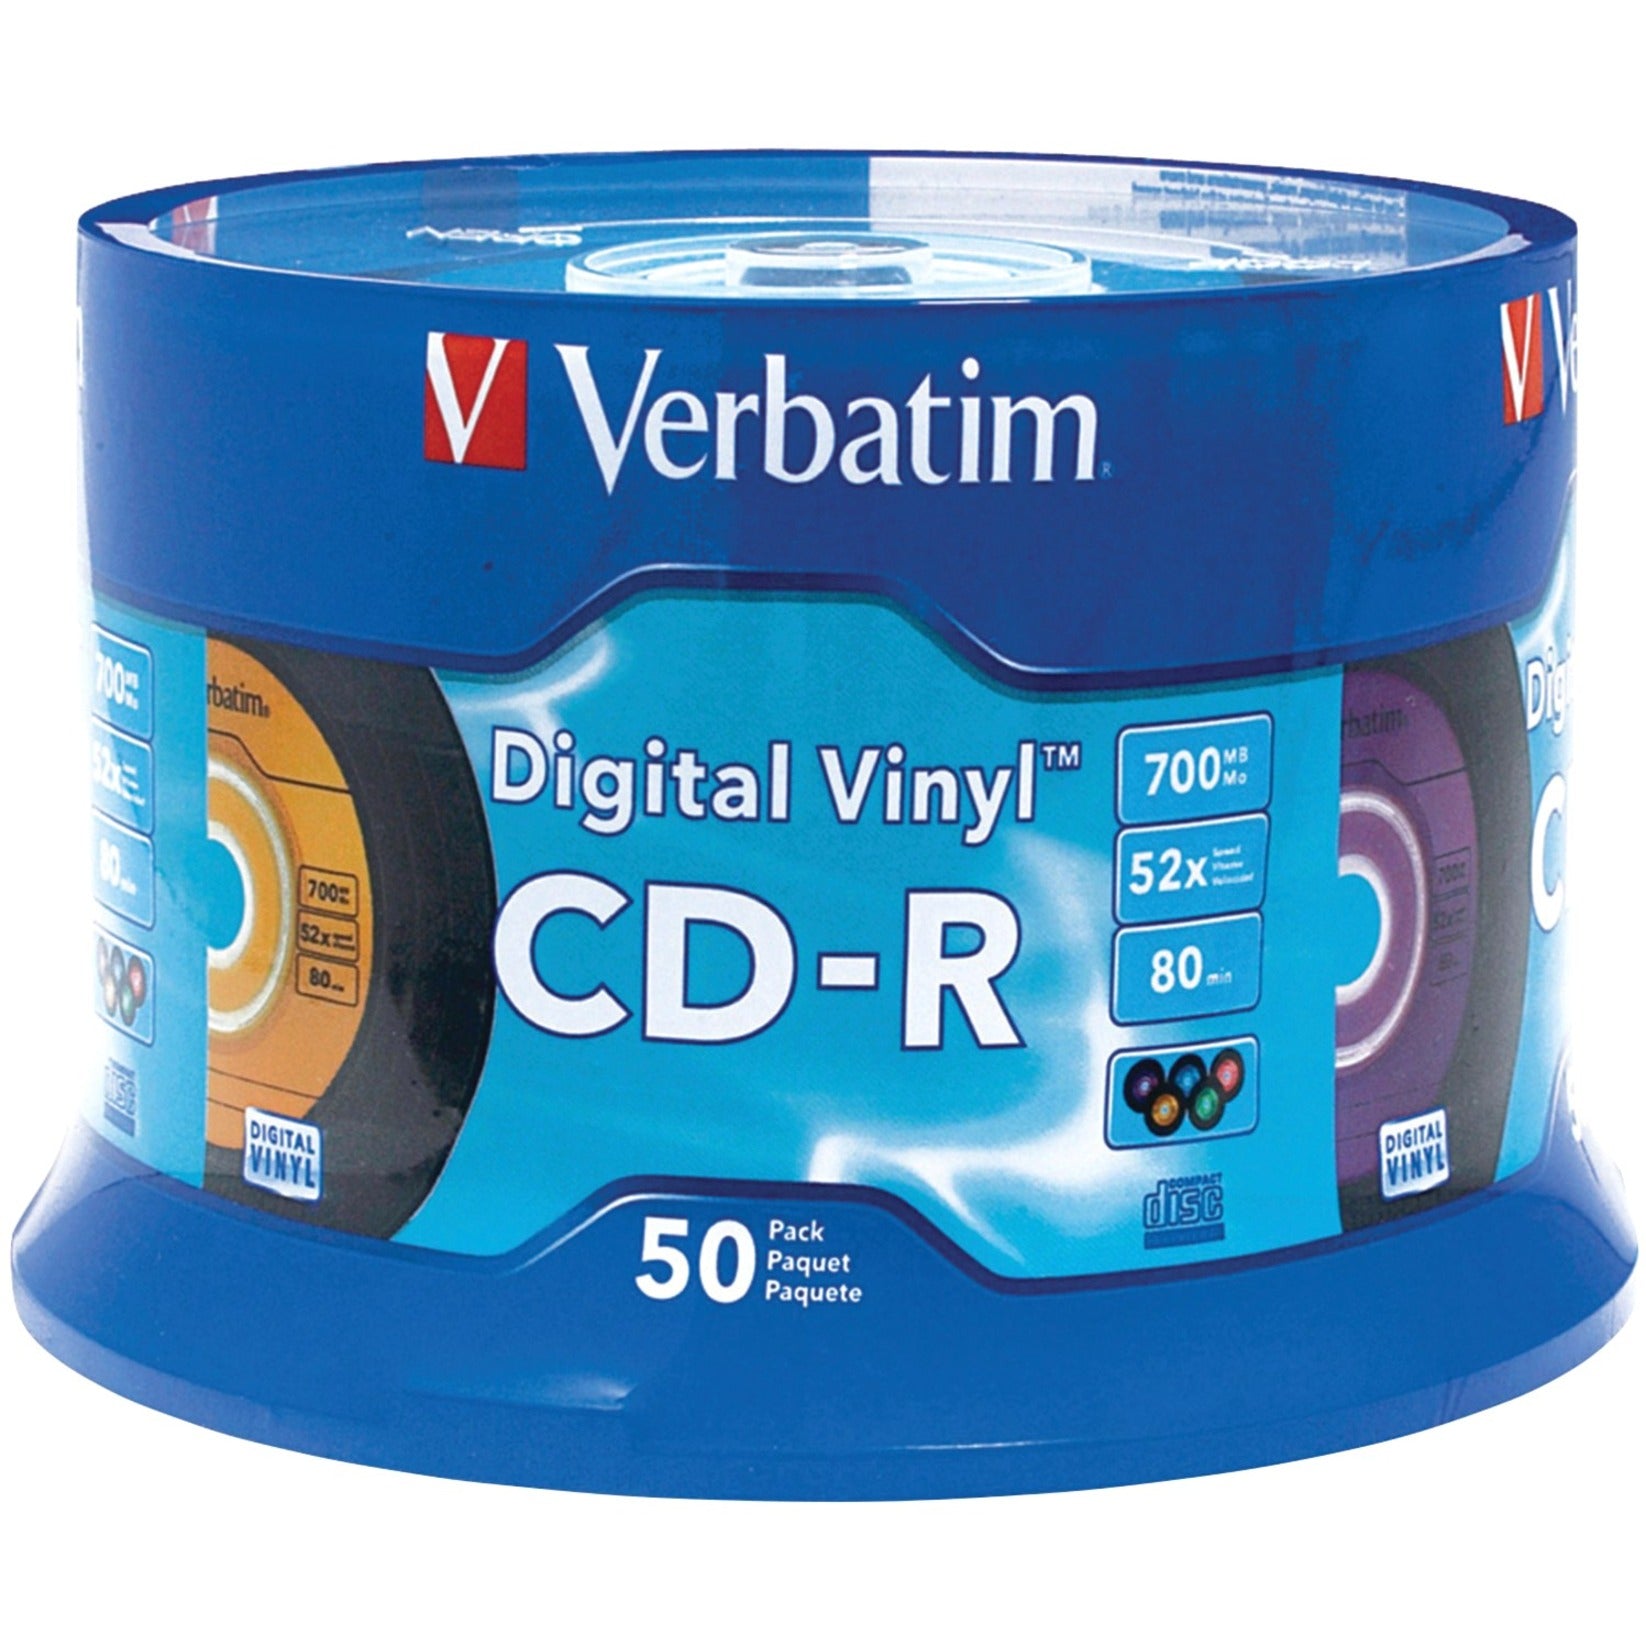 Verbatim 94587 Digital Vinyl CD-R 80MIN 700MB 52x 50pk Spindle, Long-lasting Data Protection